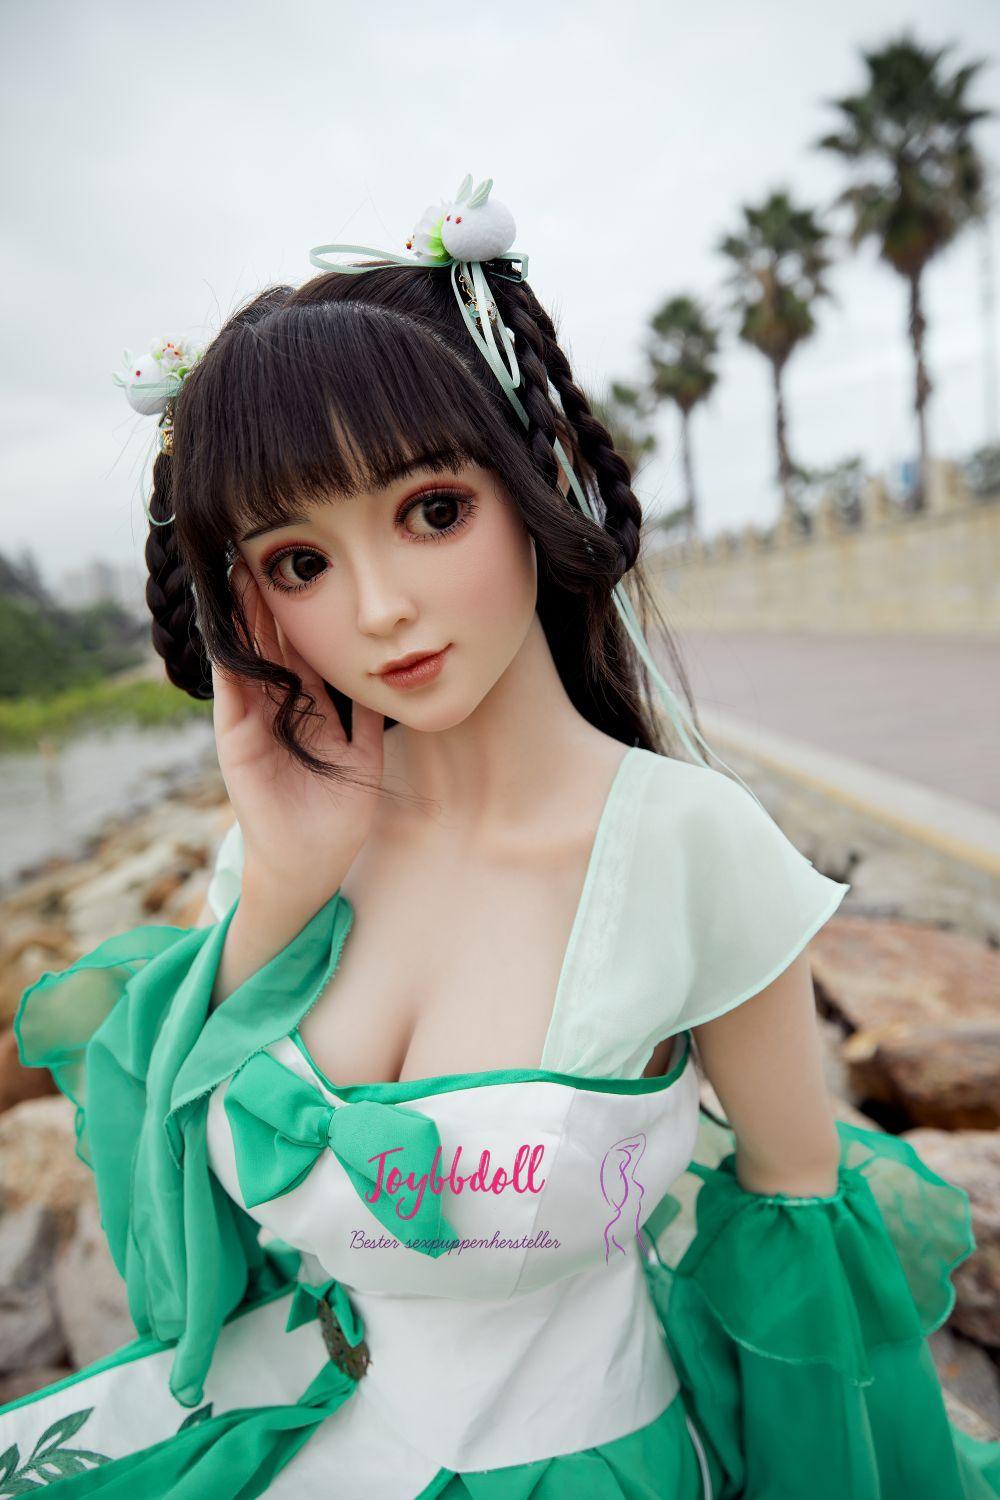 Bella-Heißen Anime Girl - Joybbdoll-CST Doll